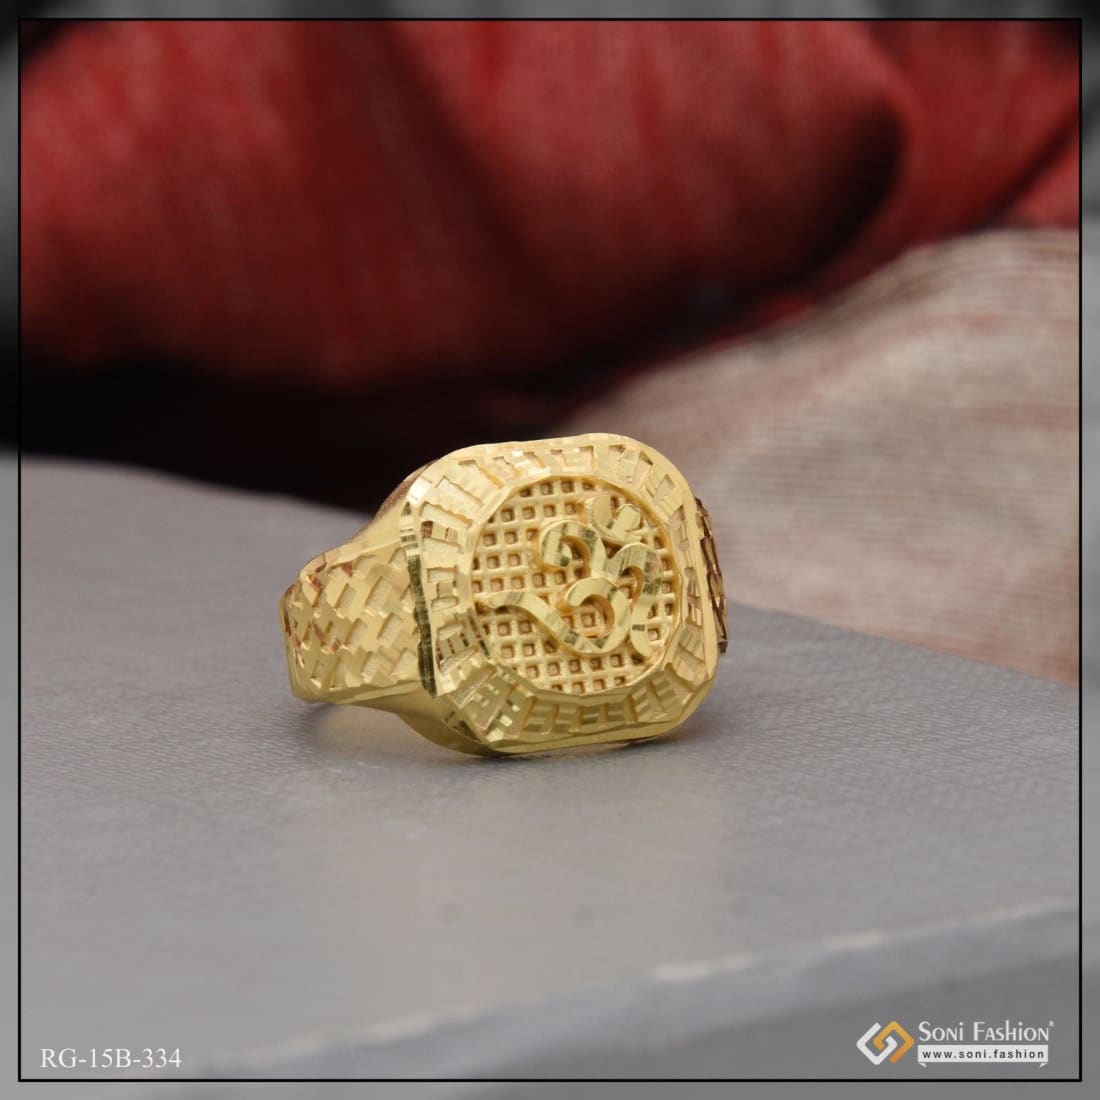 Beveled Band Ring in 18K Yellow Gold with Black Titanium, 6mm | David Yurman